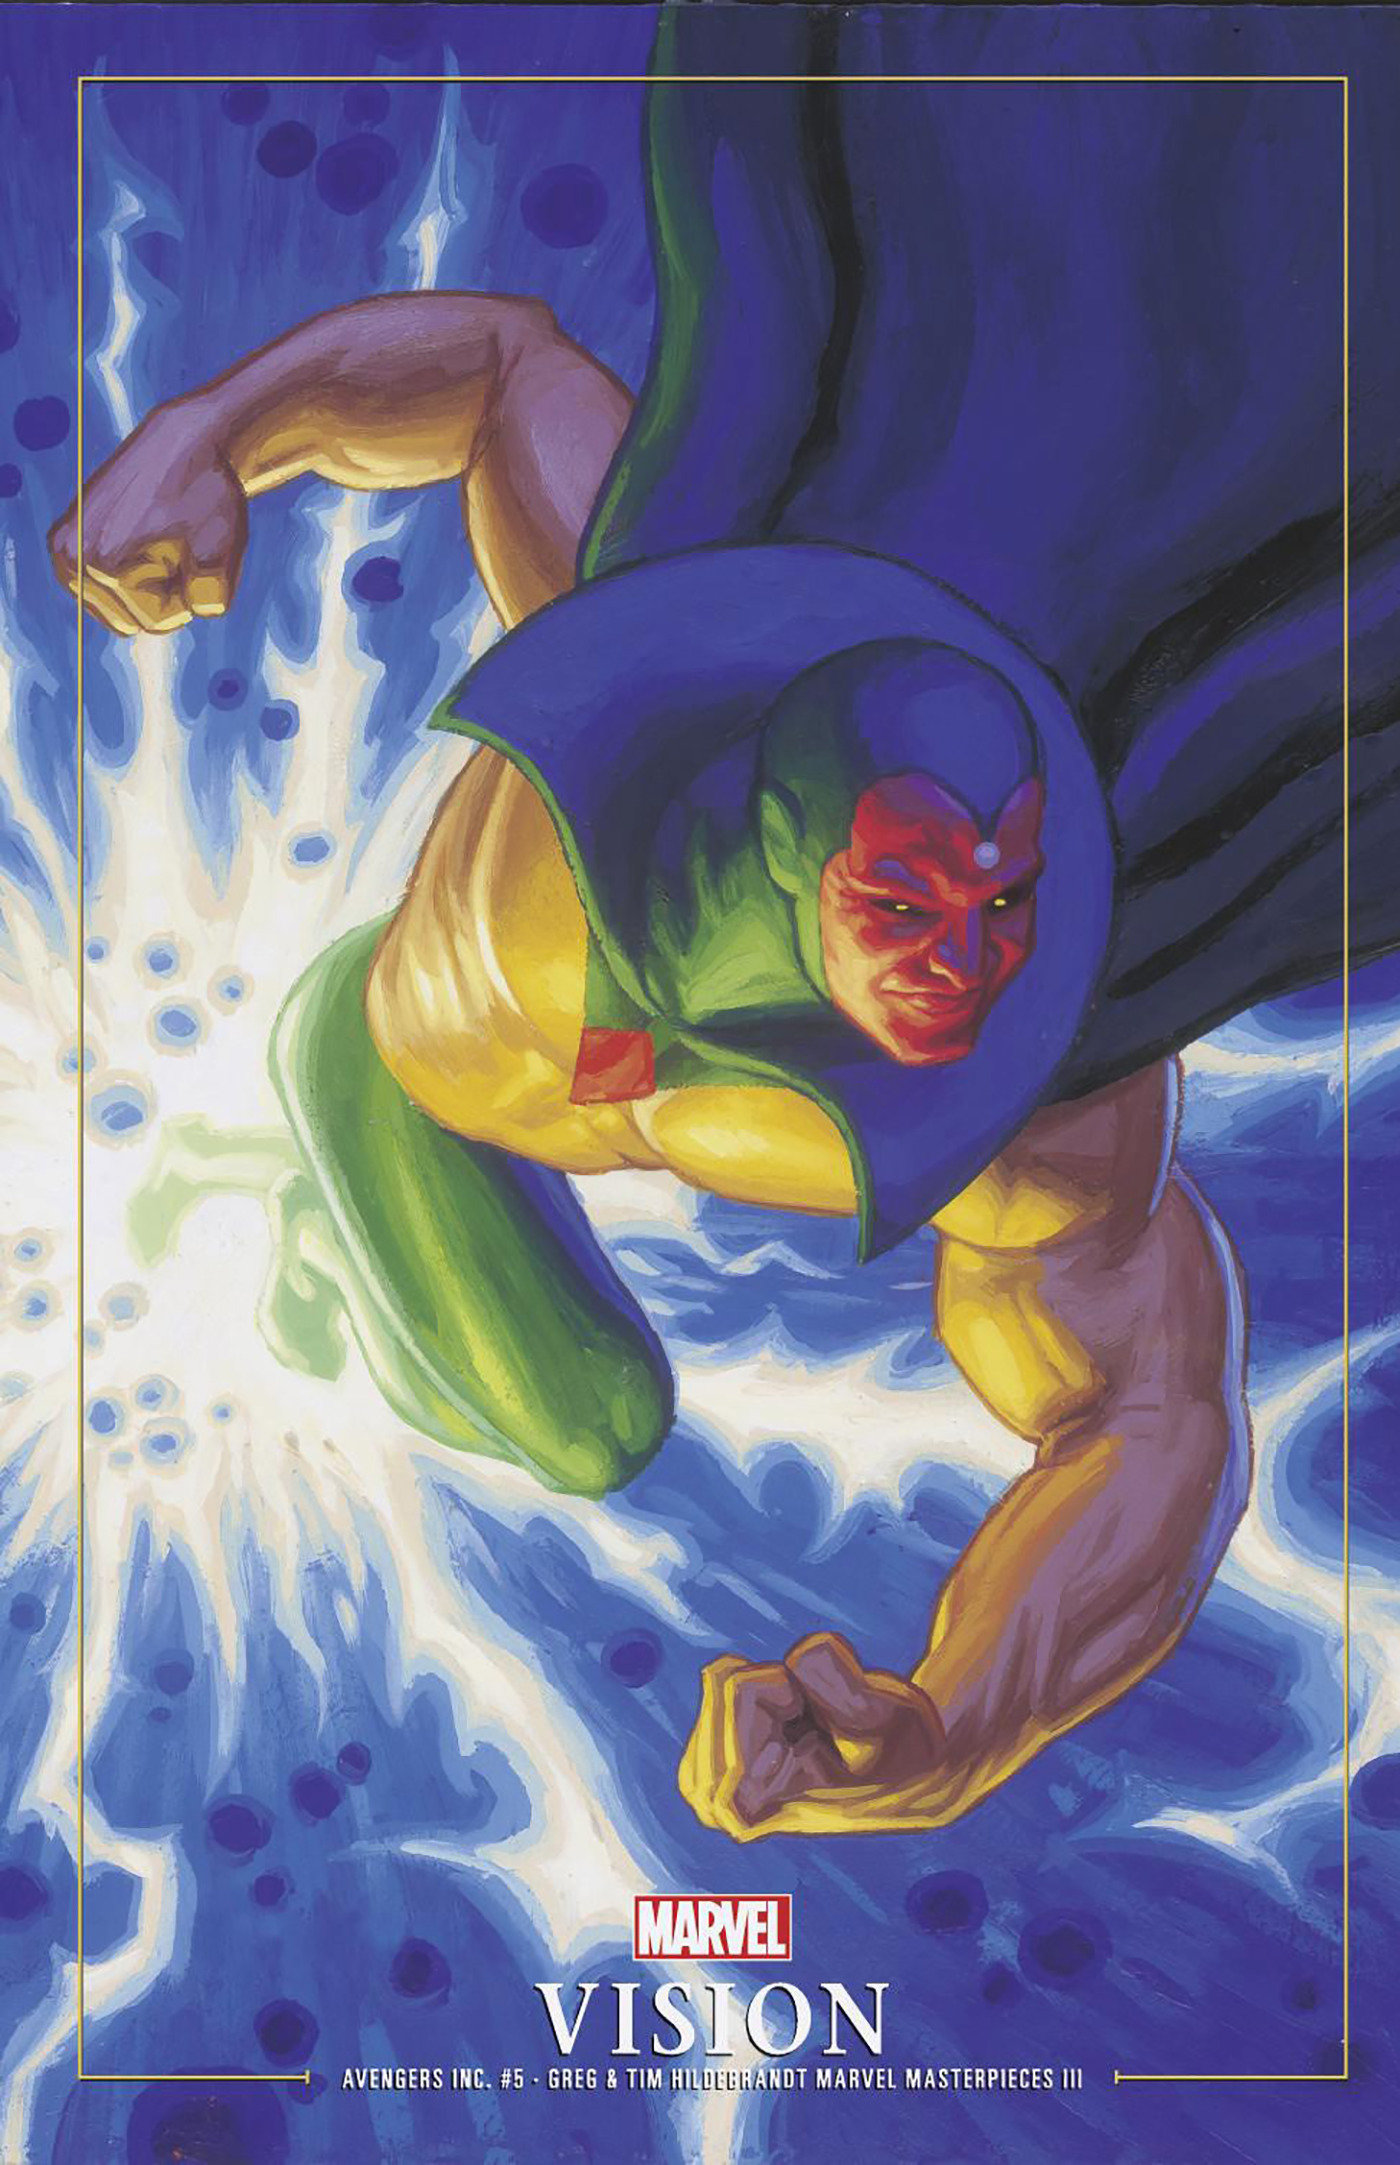 Avengers Inc. #5 Greg and Tim Hildebrandt Vision Marvel Masterpieces III Variant